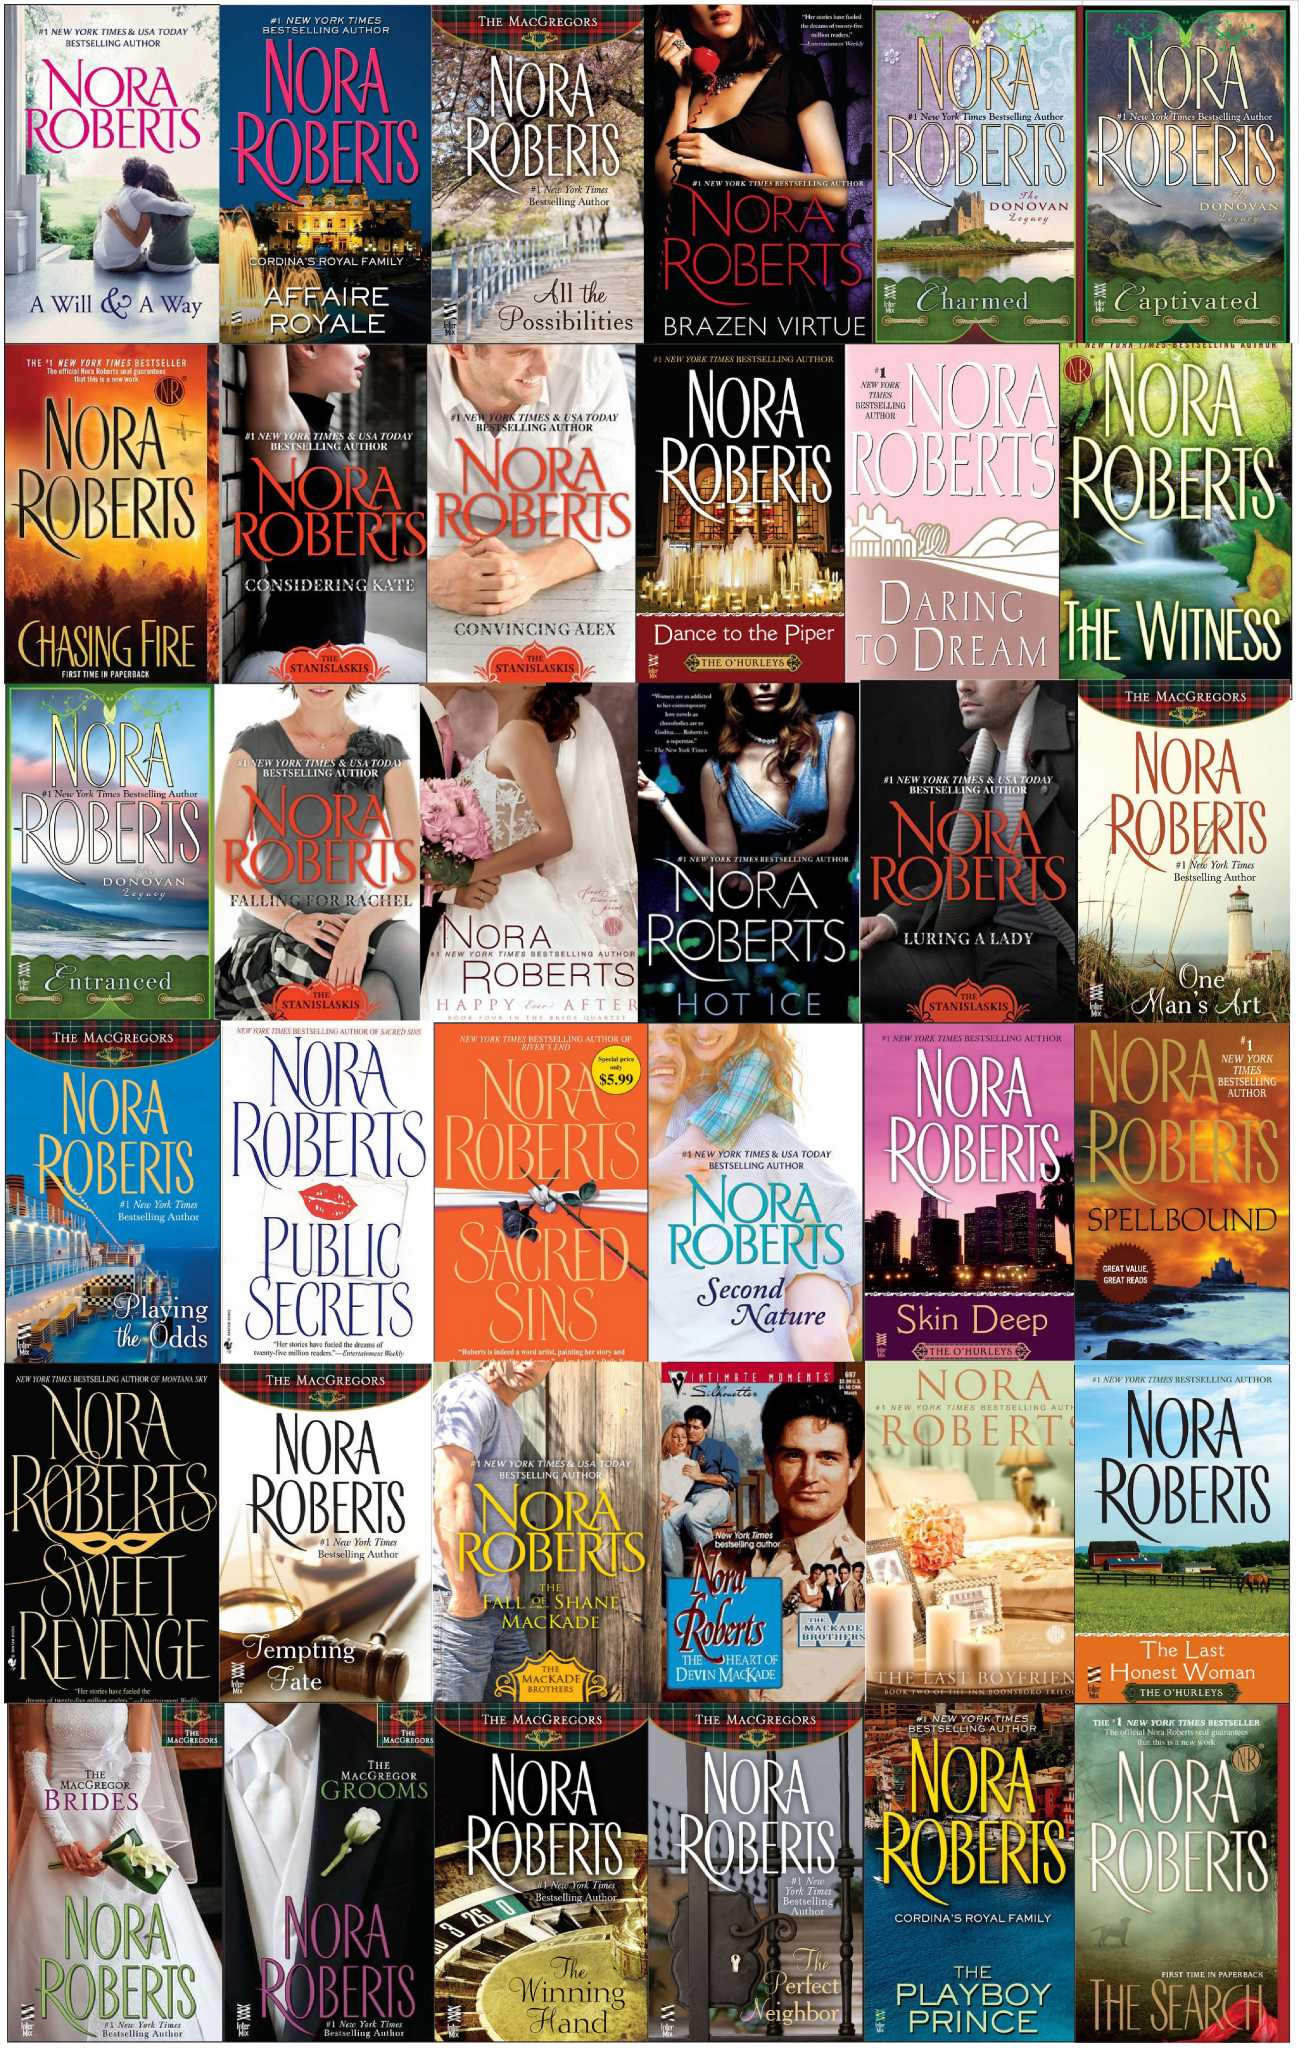 Nora Roberts publishes 200th novel